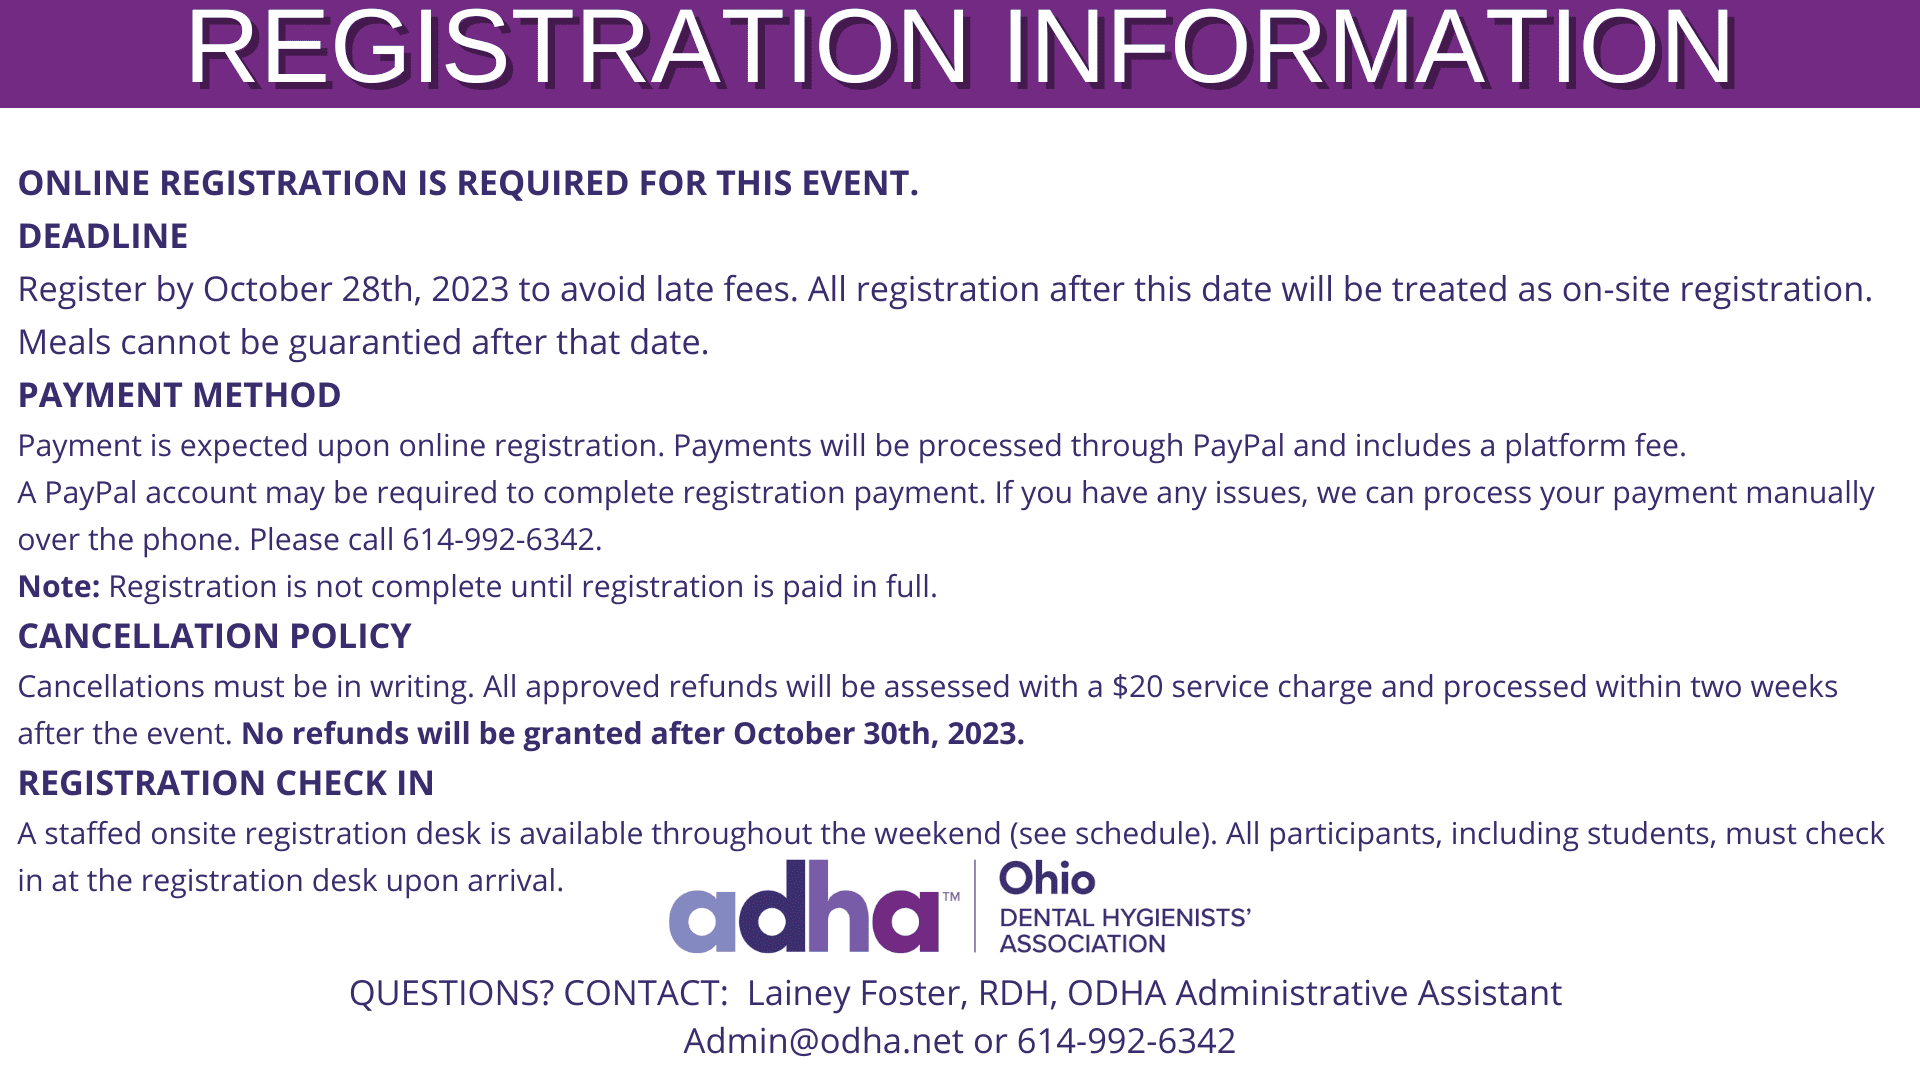 Ada registration information flyer.